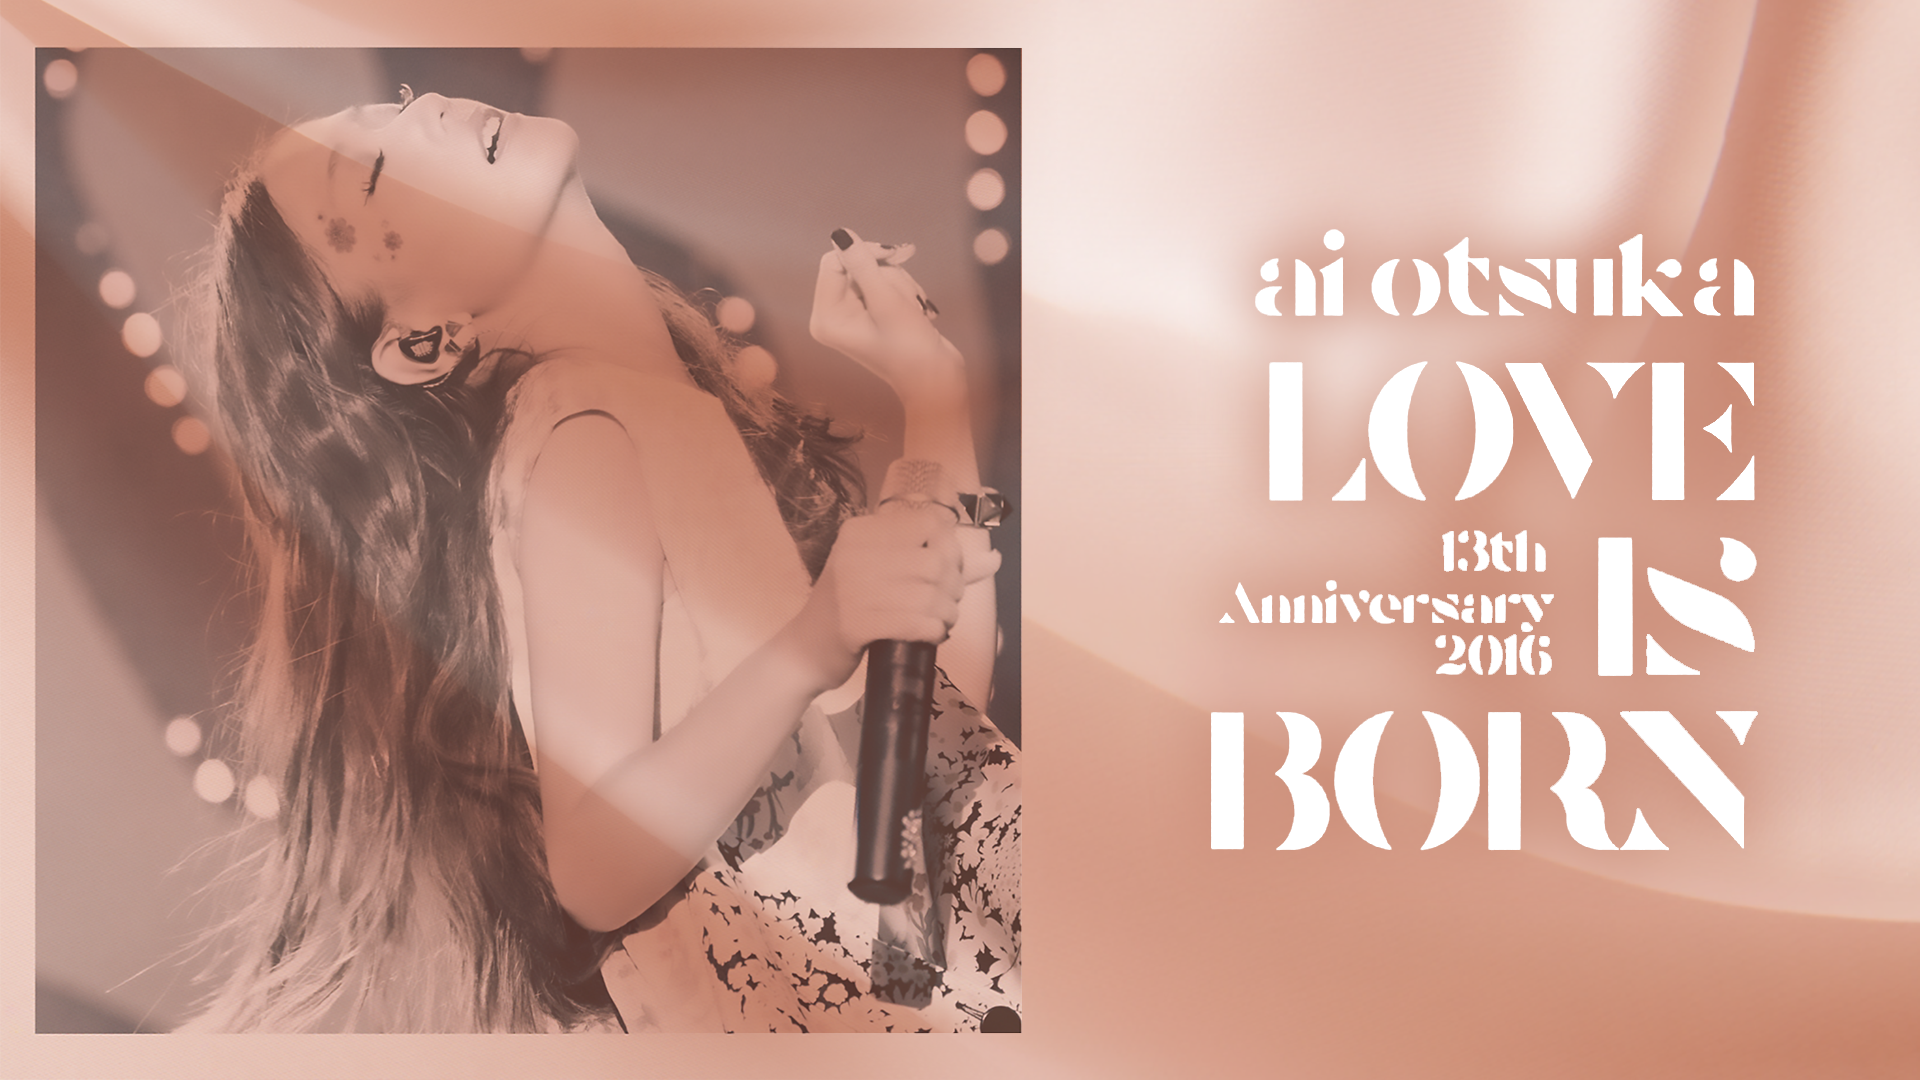 LOVE IS BORN ～13th Anniversary 2016～ (音楽・ライブ / 2016) - 動画配信 | U-NEXT  31日間無料トライアル